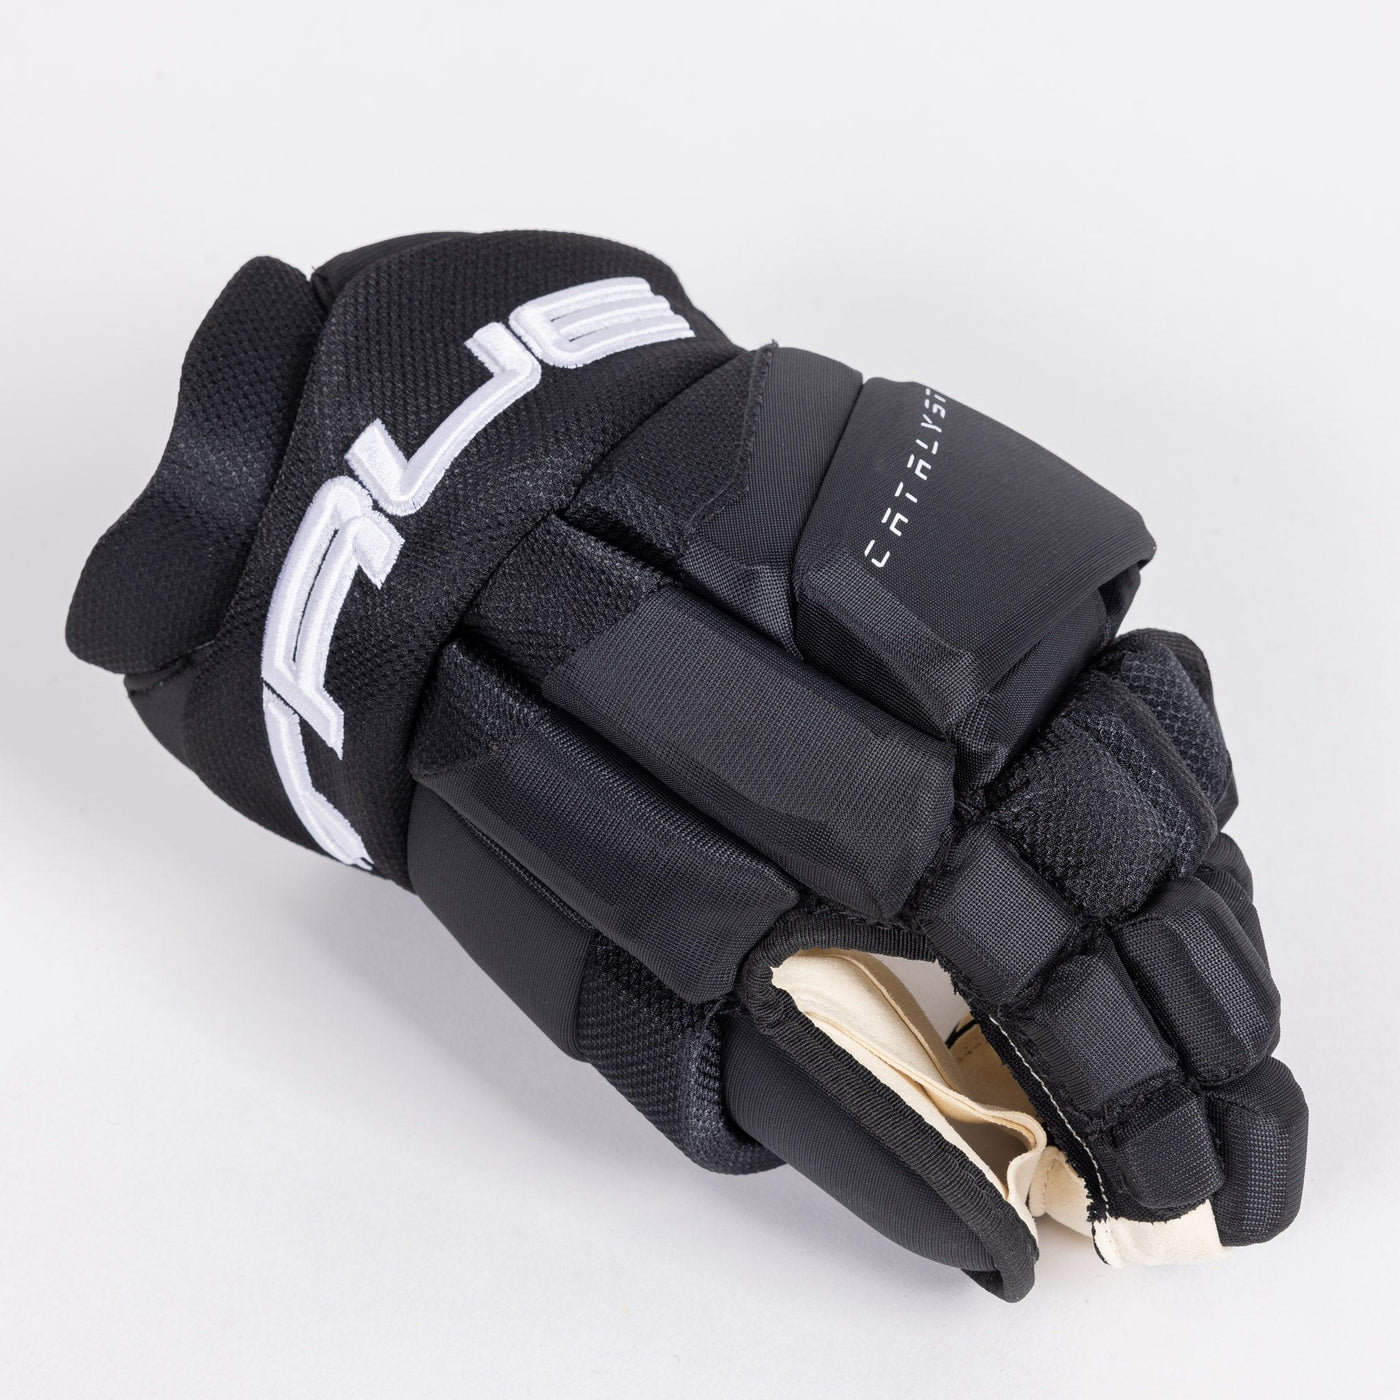 TRUE Catalyst Pro Stock Senior Hockey Glove - Colorado Avalanche - The Hockey Shop Source For Sports